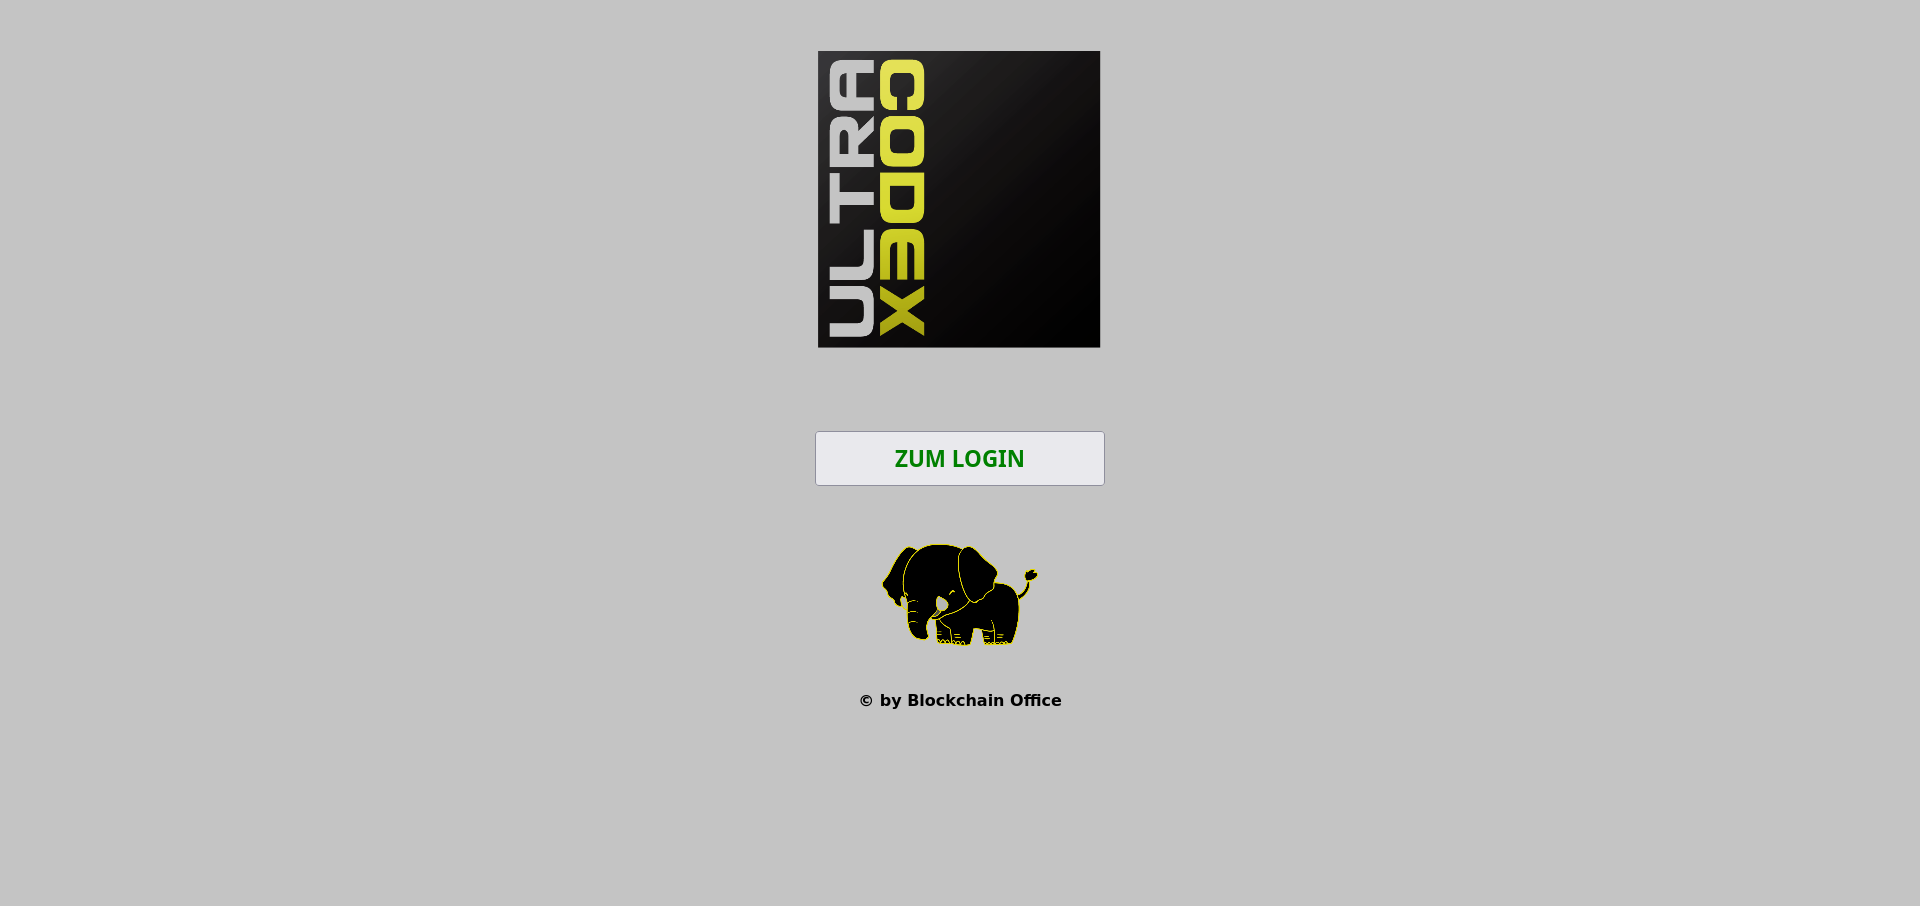 Desktop Login UltraCodex